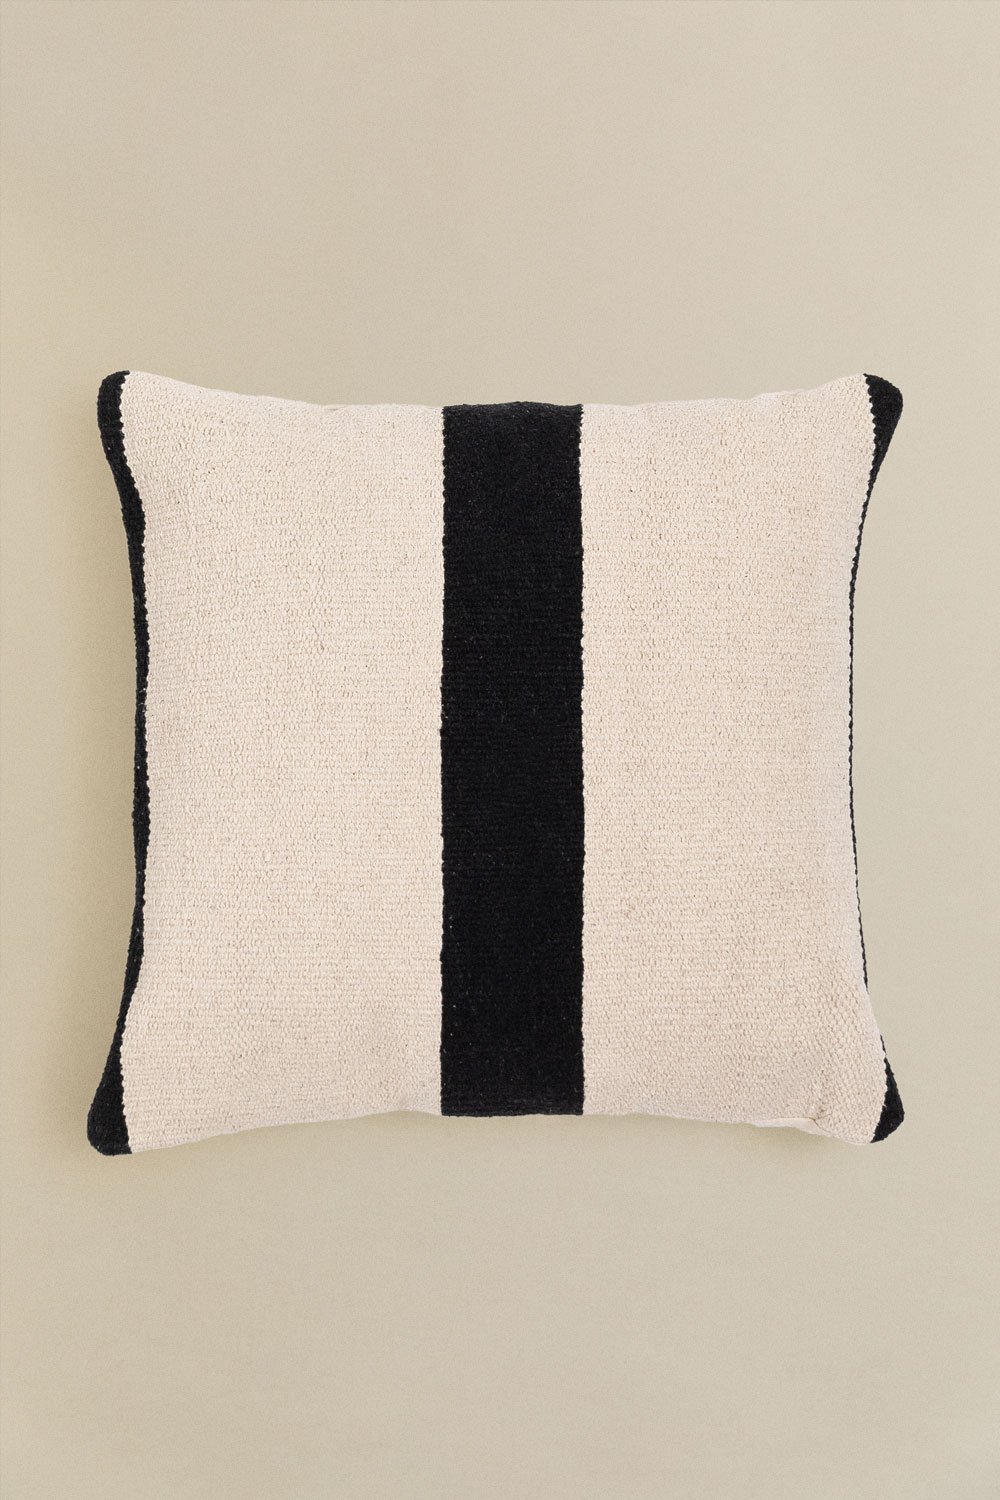 Square Cotton Cushion (45x45 cm) Corwin, gallery image 1